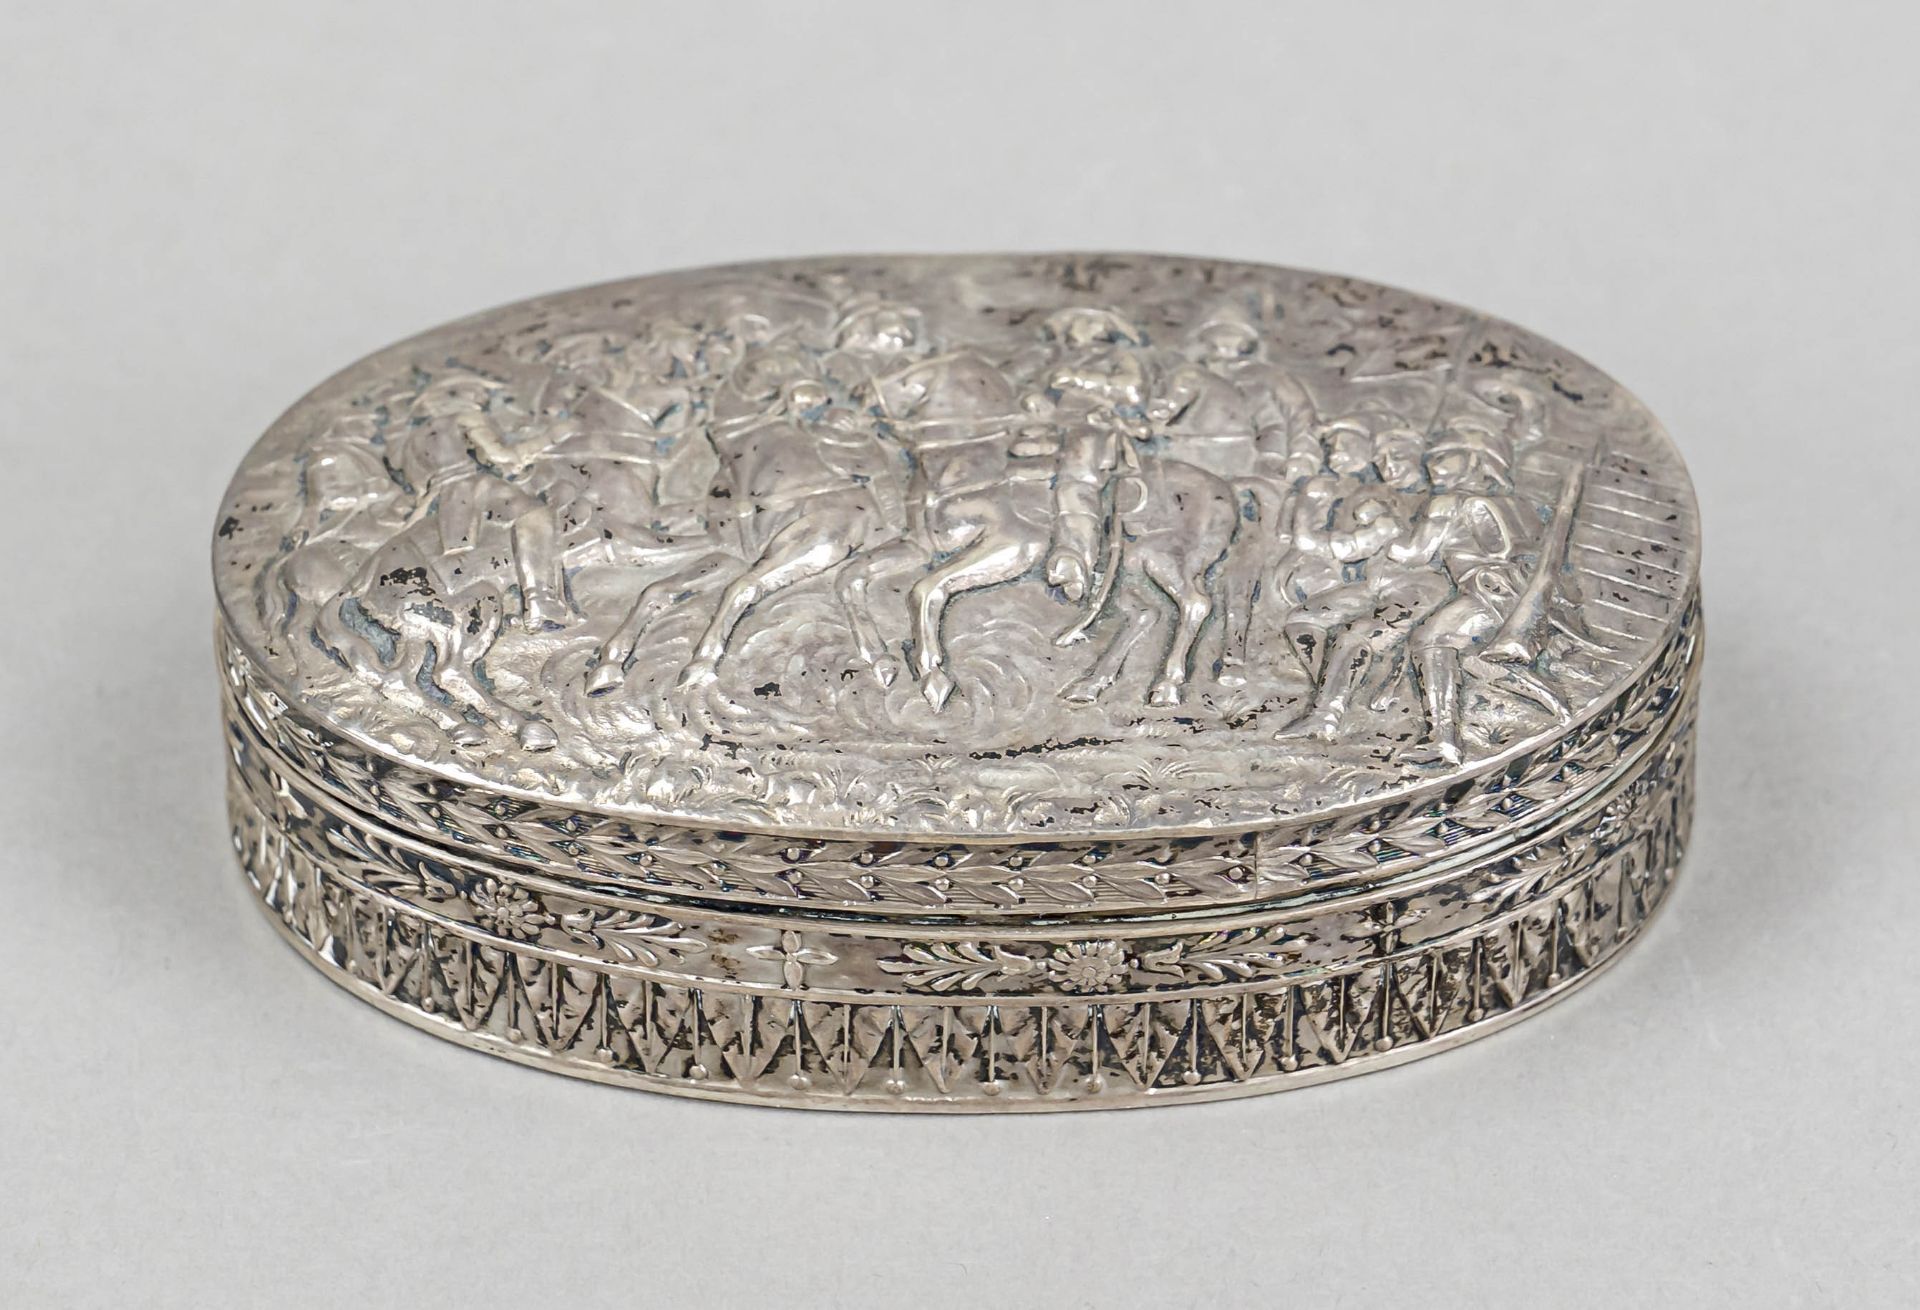 Oval lidded box, c. 1900, probably Hanau, B. Neresheimer & Söhne (?), silver 88 (916/000), - Image 2 of 2